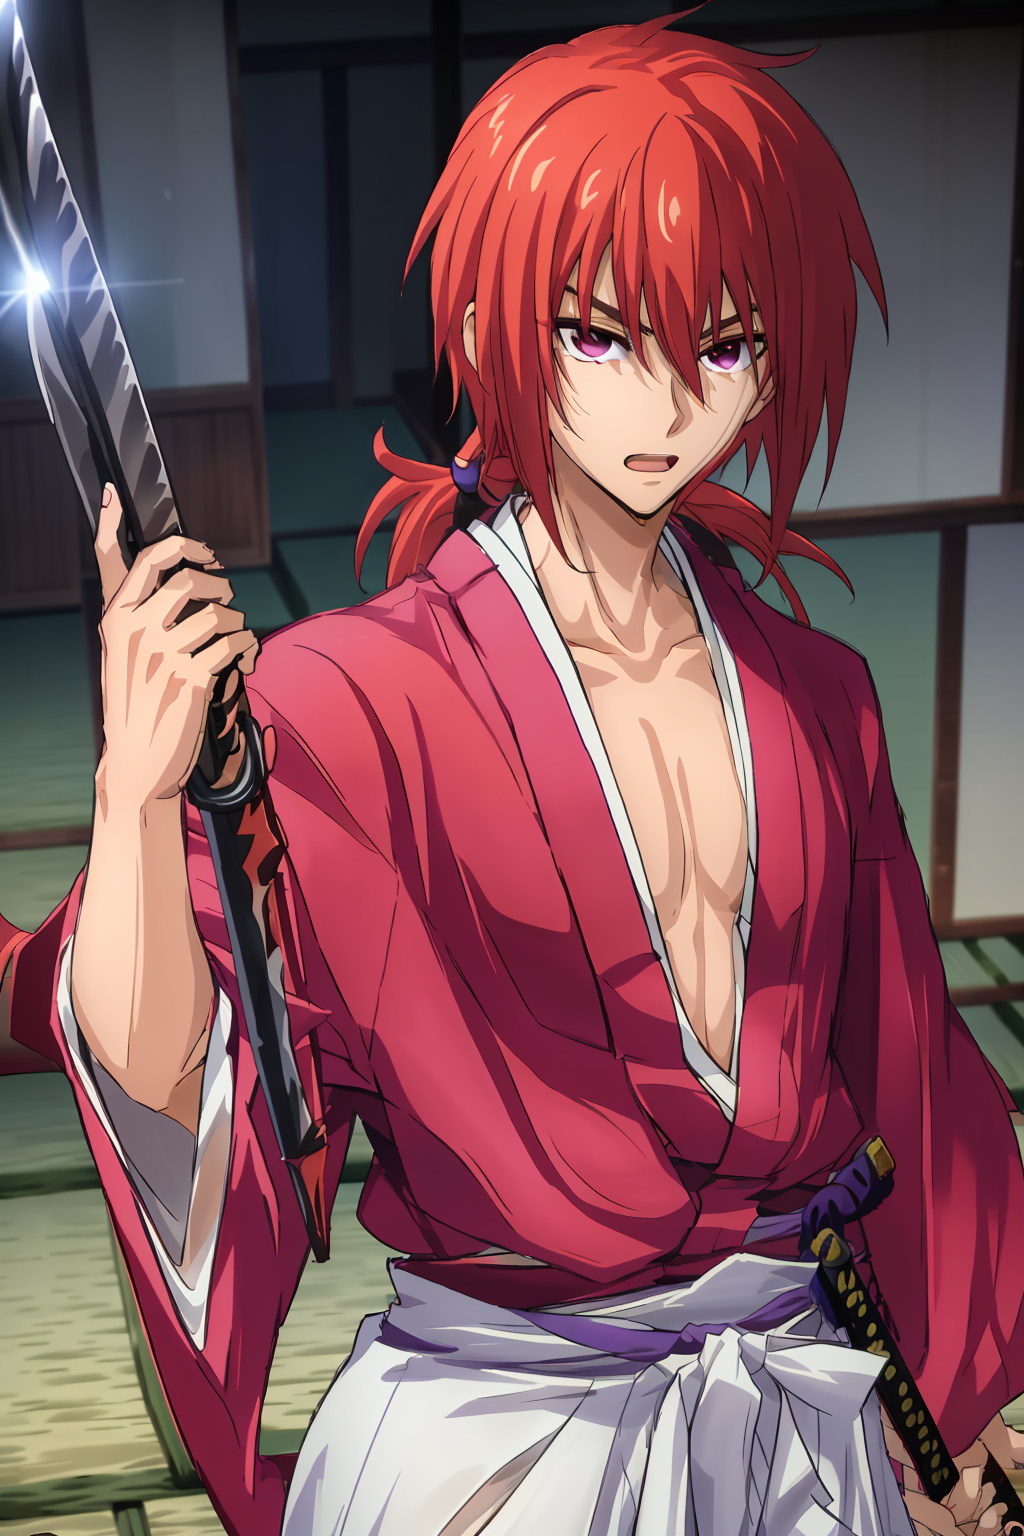 Woman Anime Red Hair Japanese Samurai Stock Photo 1586851150  Shutterstock